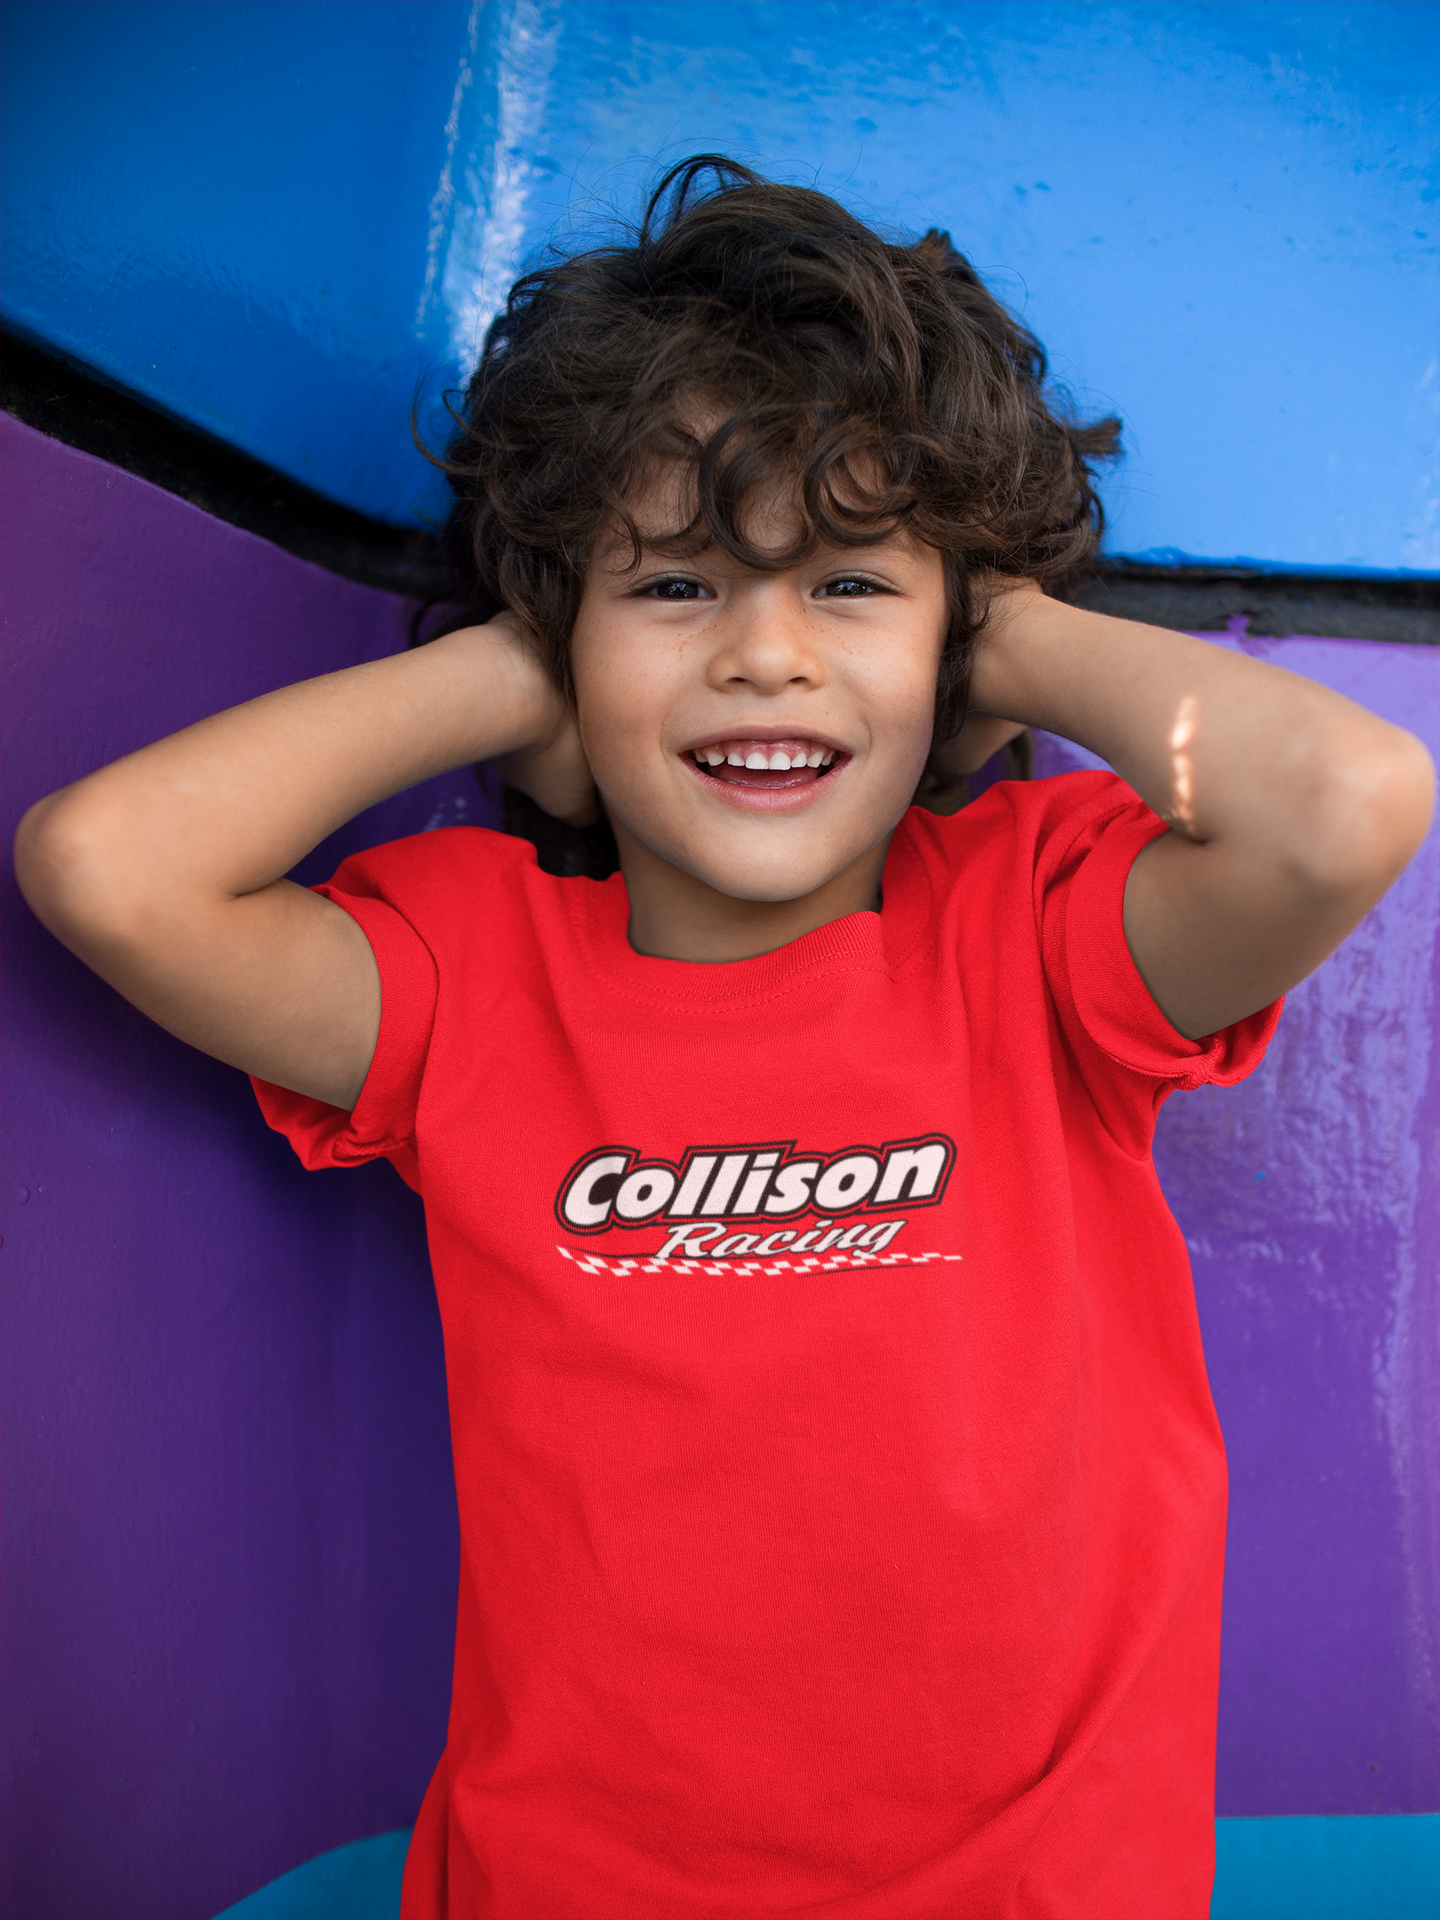 Collison Racing / Birel 2 Side Youth T-Shirt